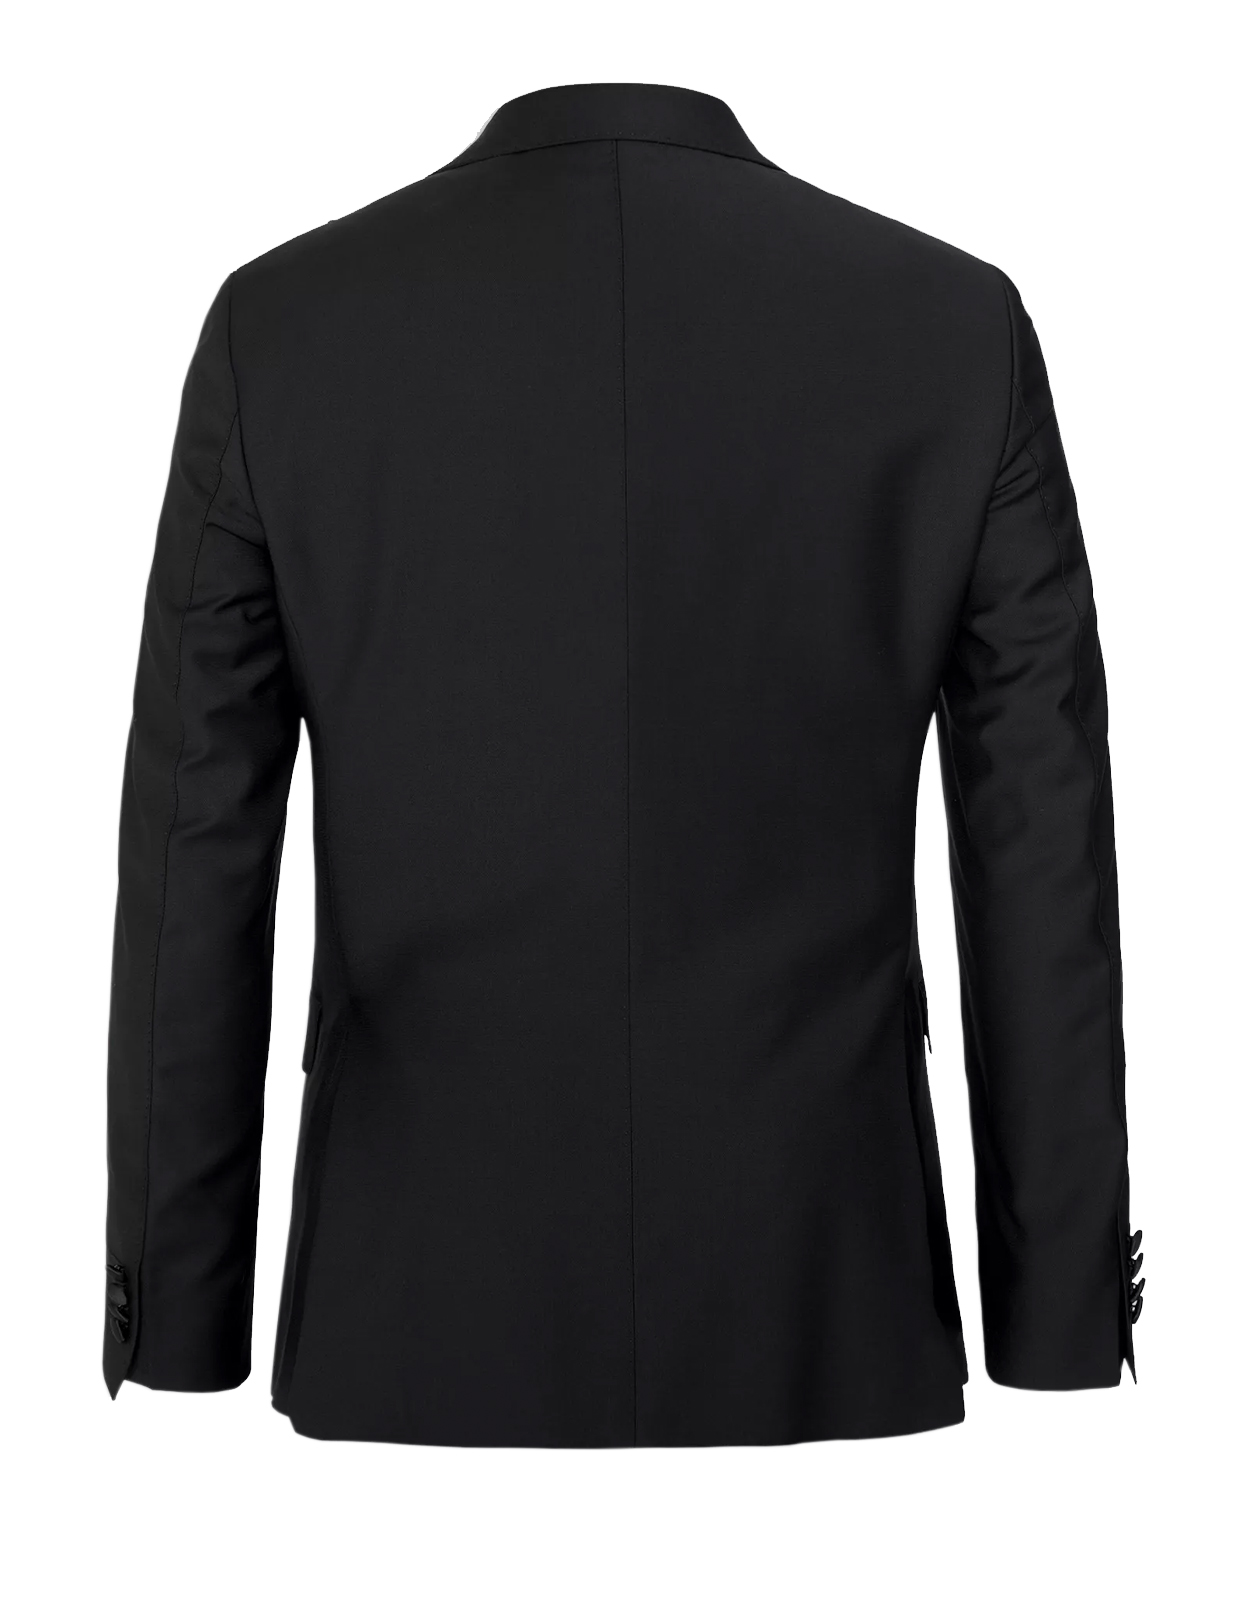 Elder Tuxedo Jacket Mix & Match Black